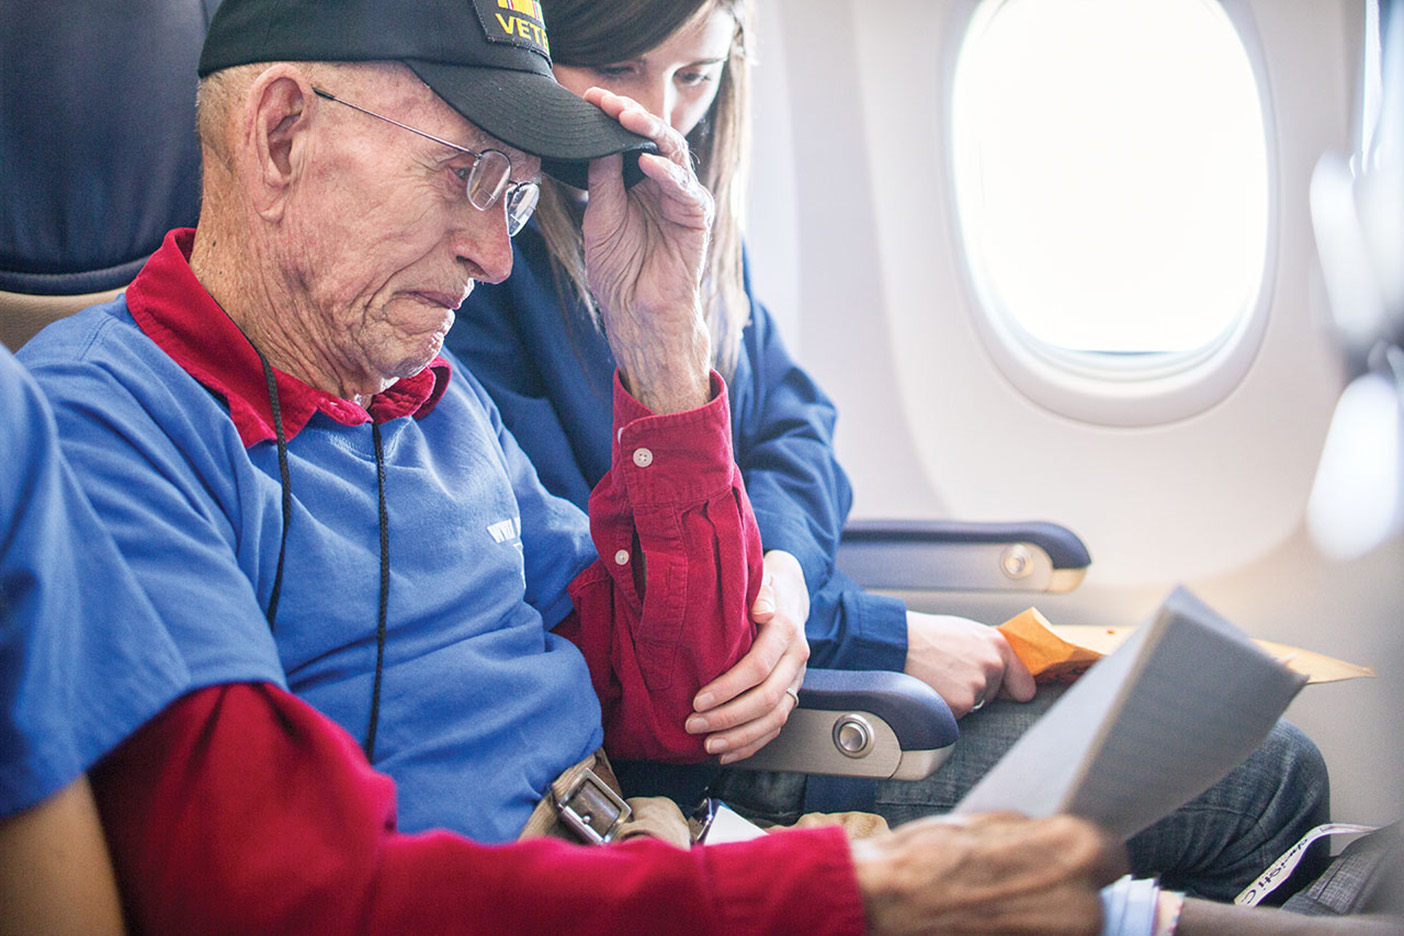 Veteran William Turner and nursing student Christi Swenson reading a letter on the plane.